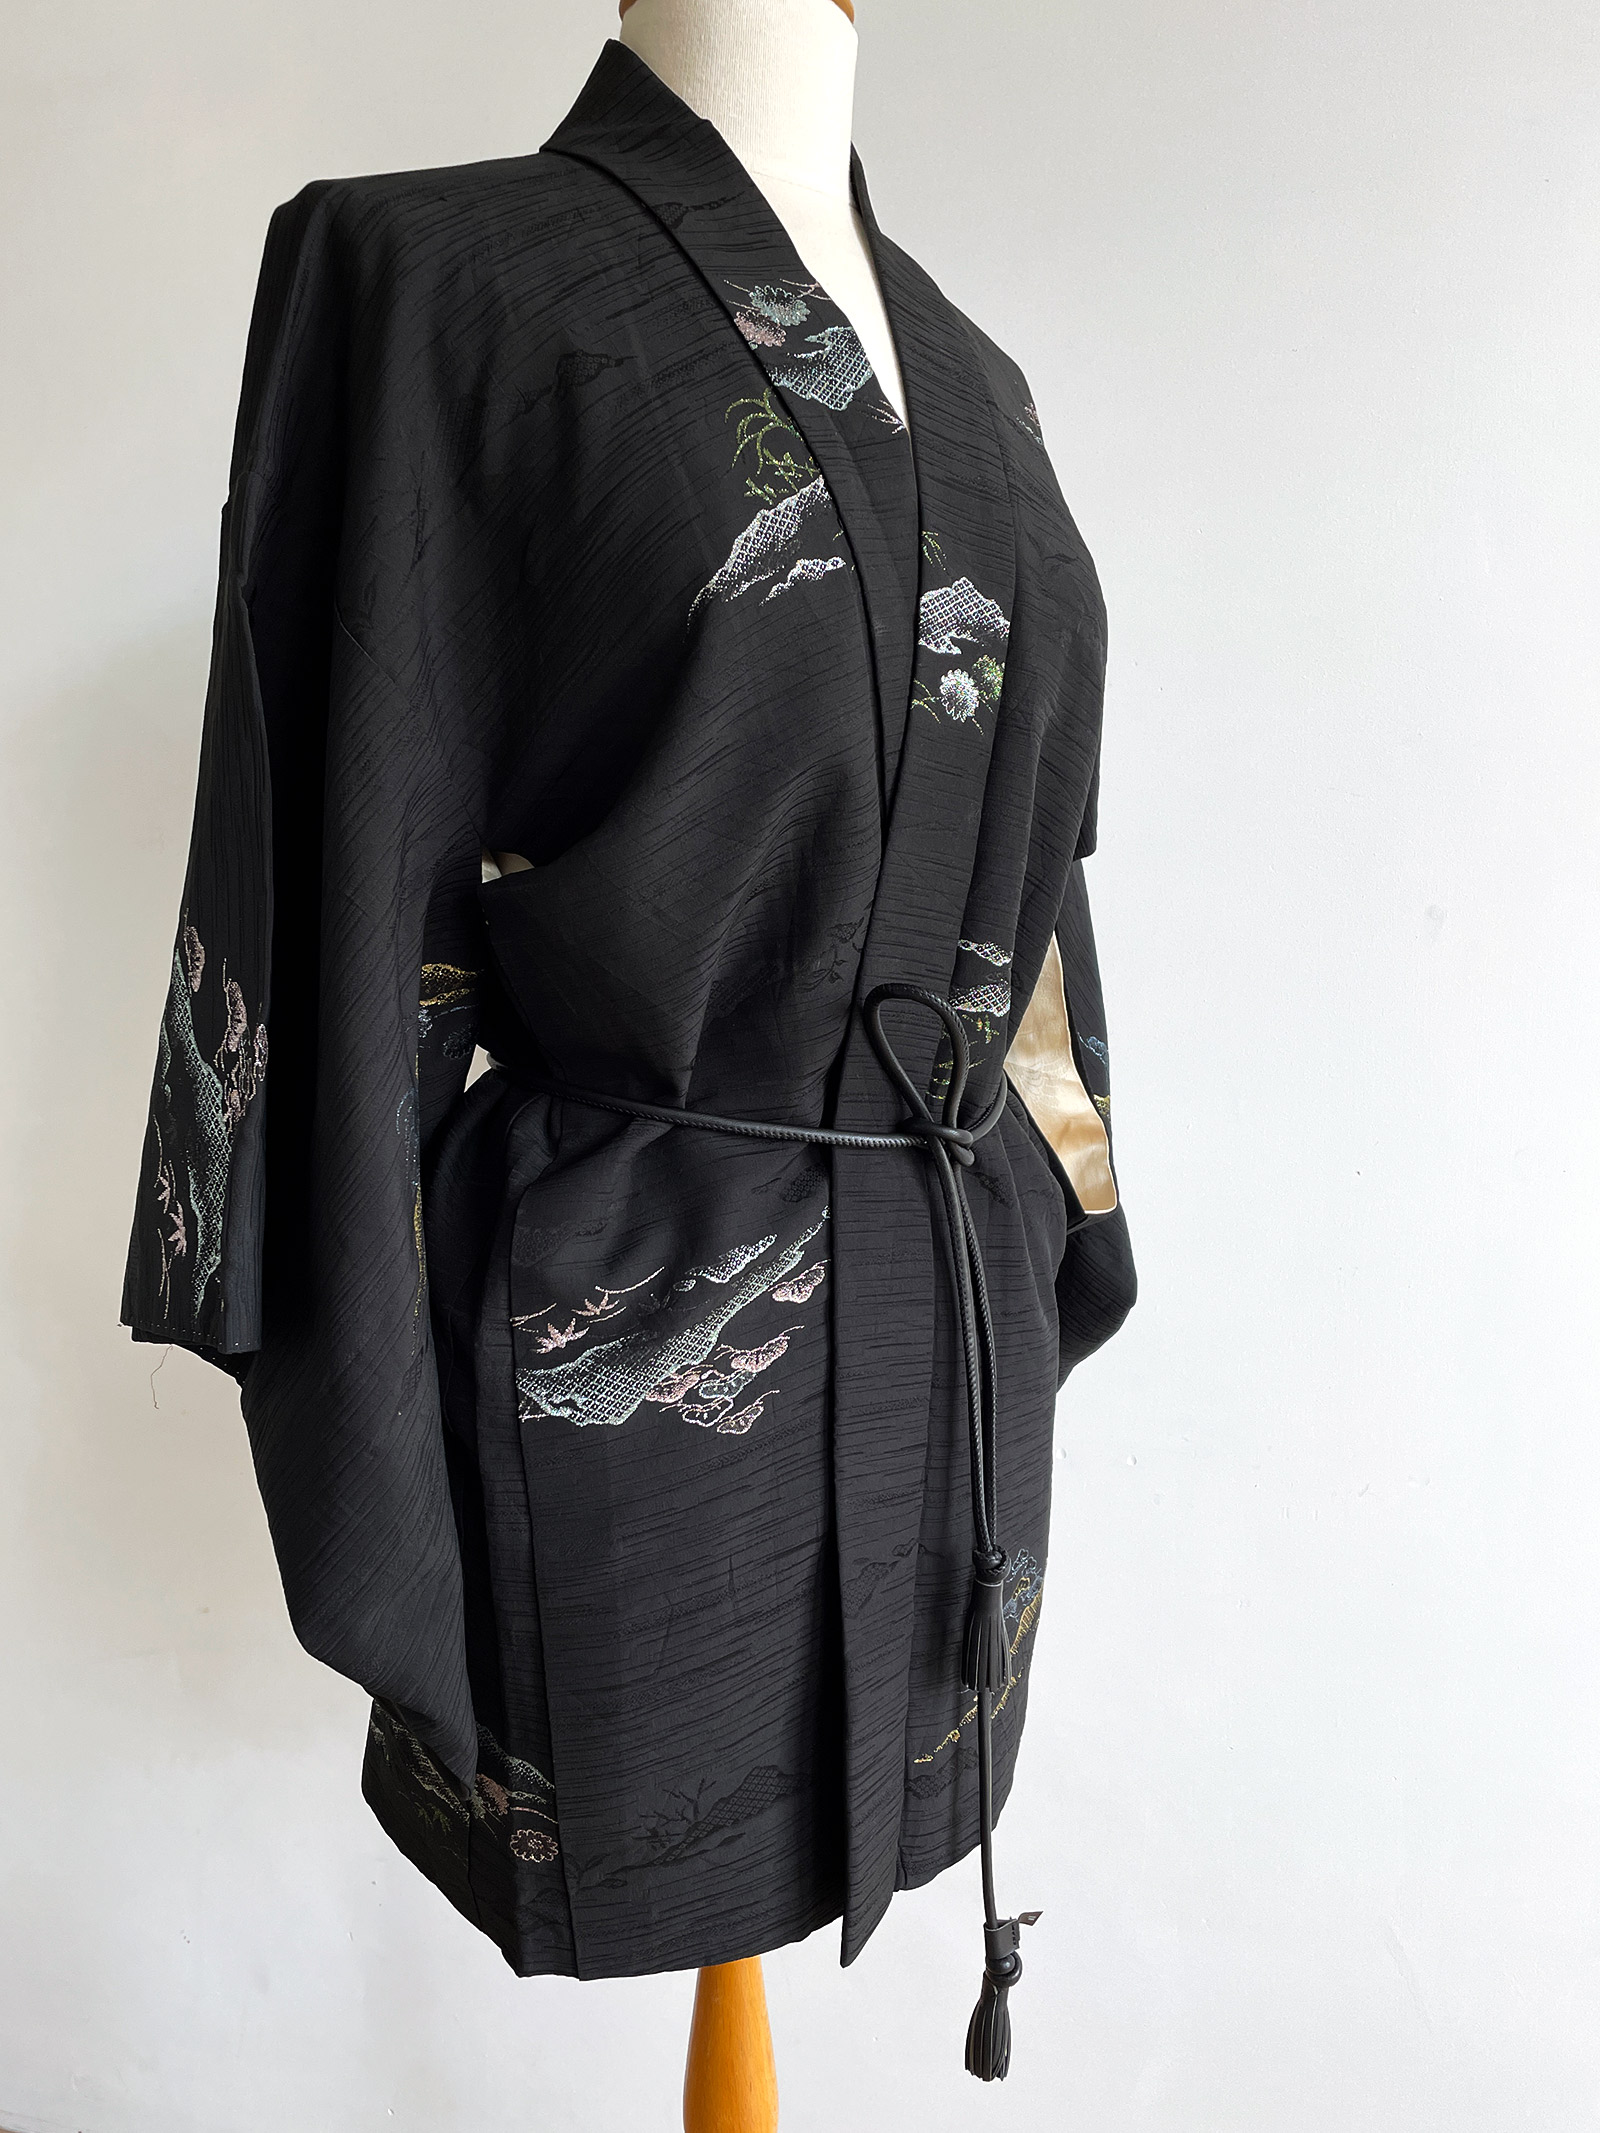 Mayumi – chic Haori in black silk with pattern of nature sceneries